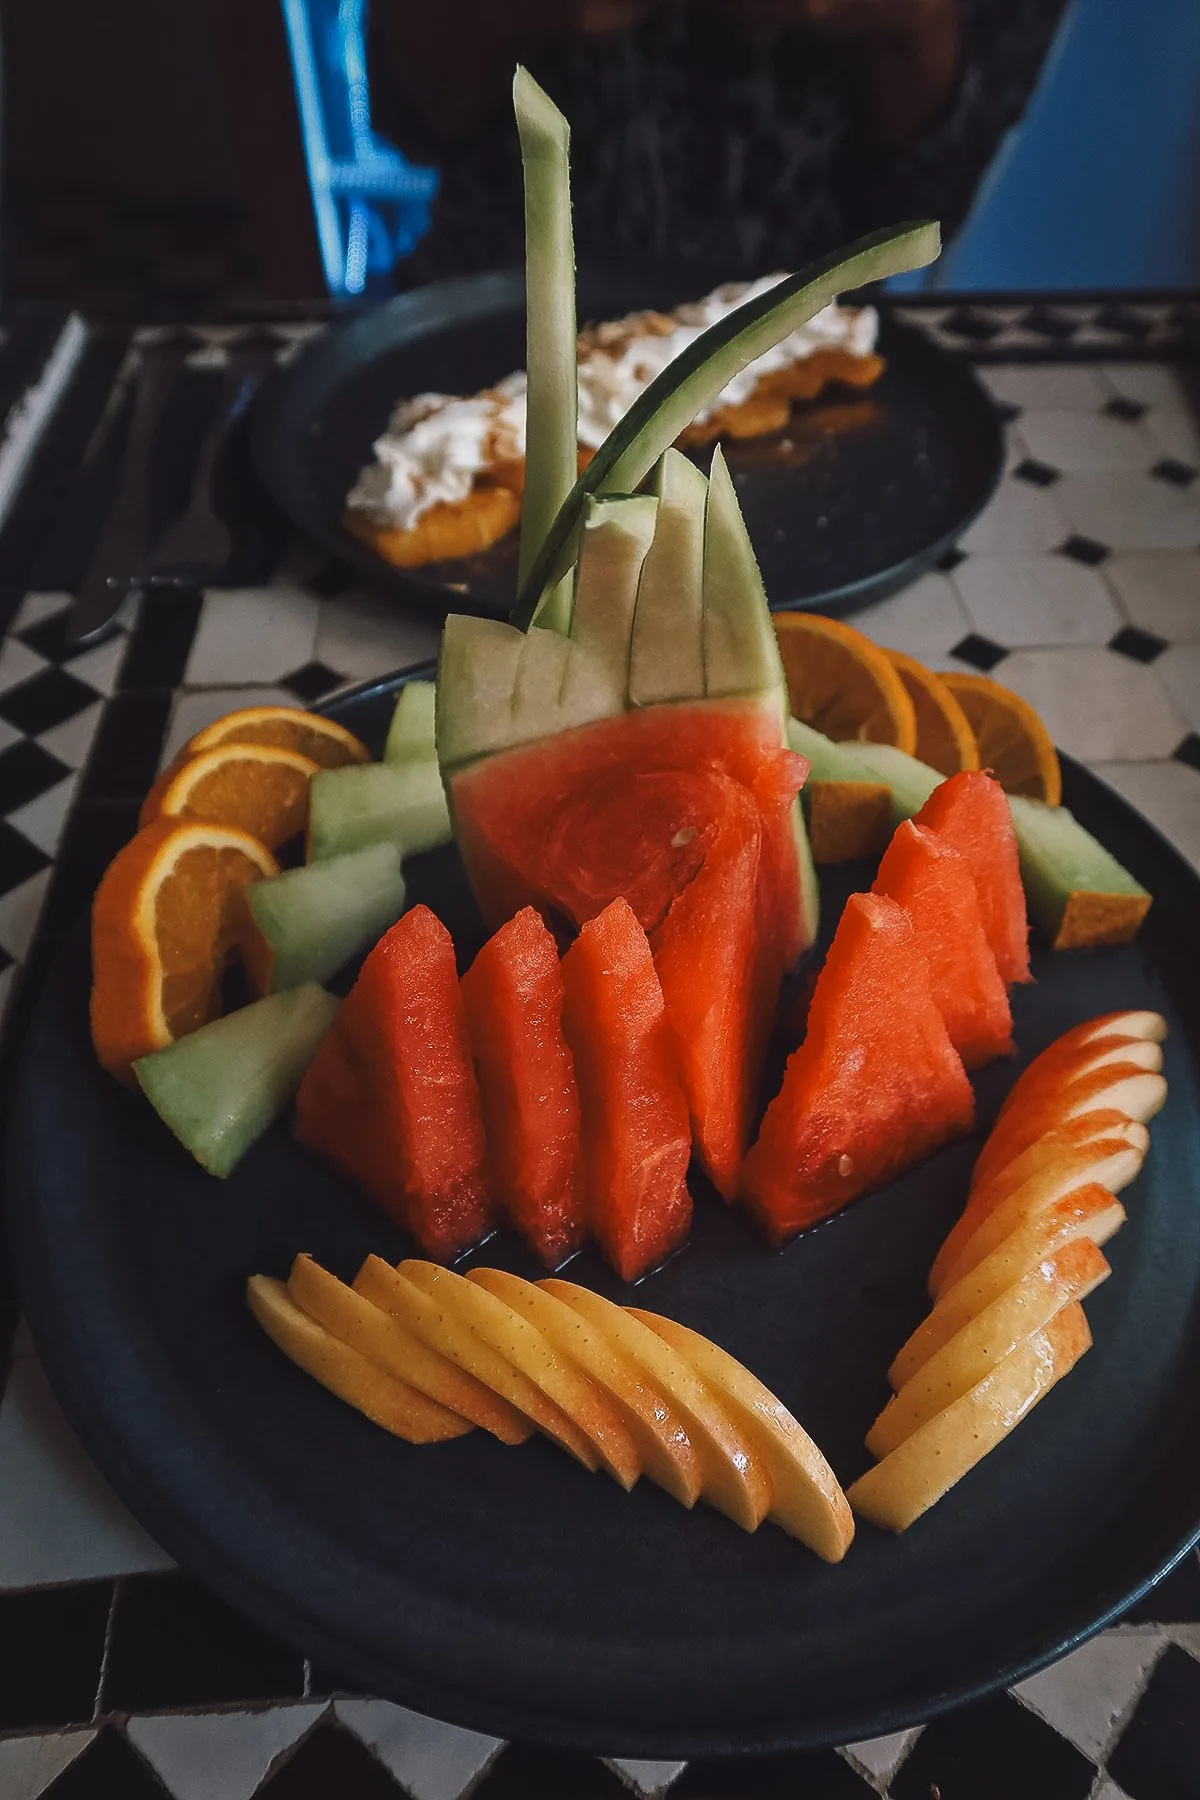 Fruit plate at a restaurant in Marrakech